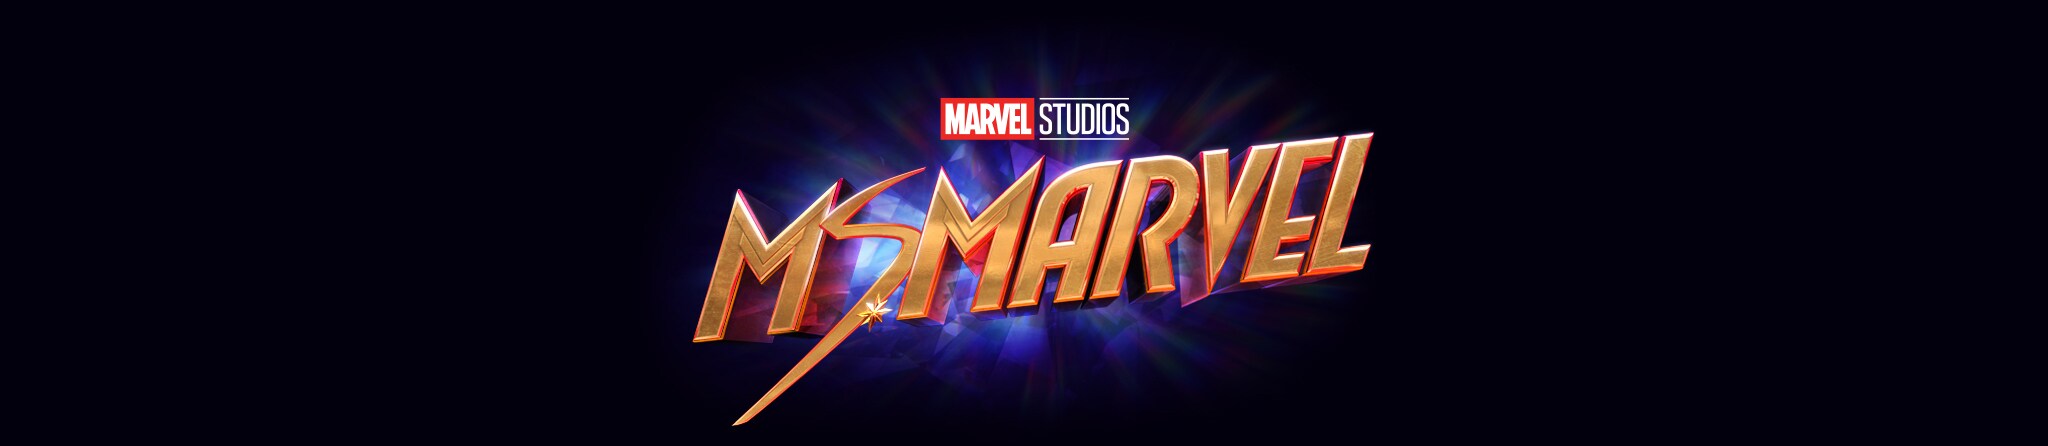 Marvel Studios | Ms. Marvel